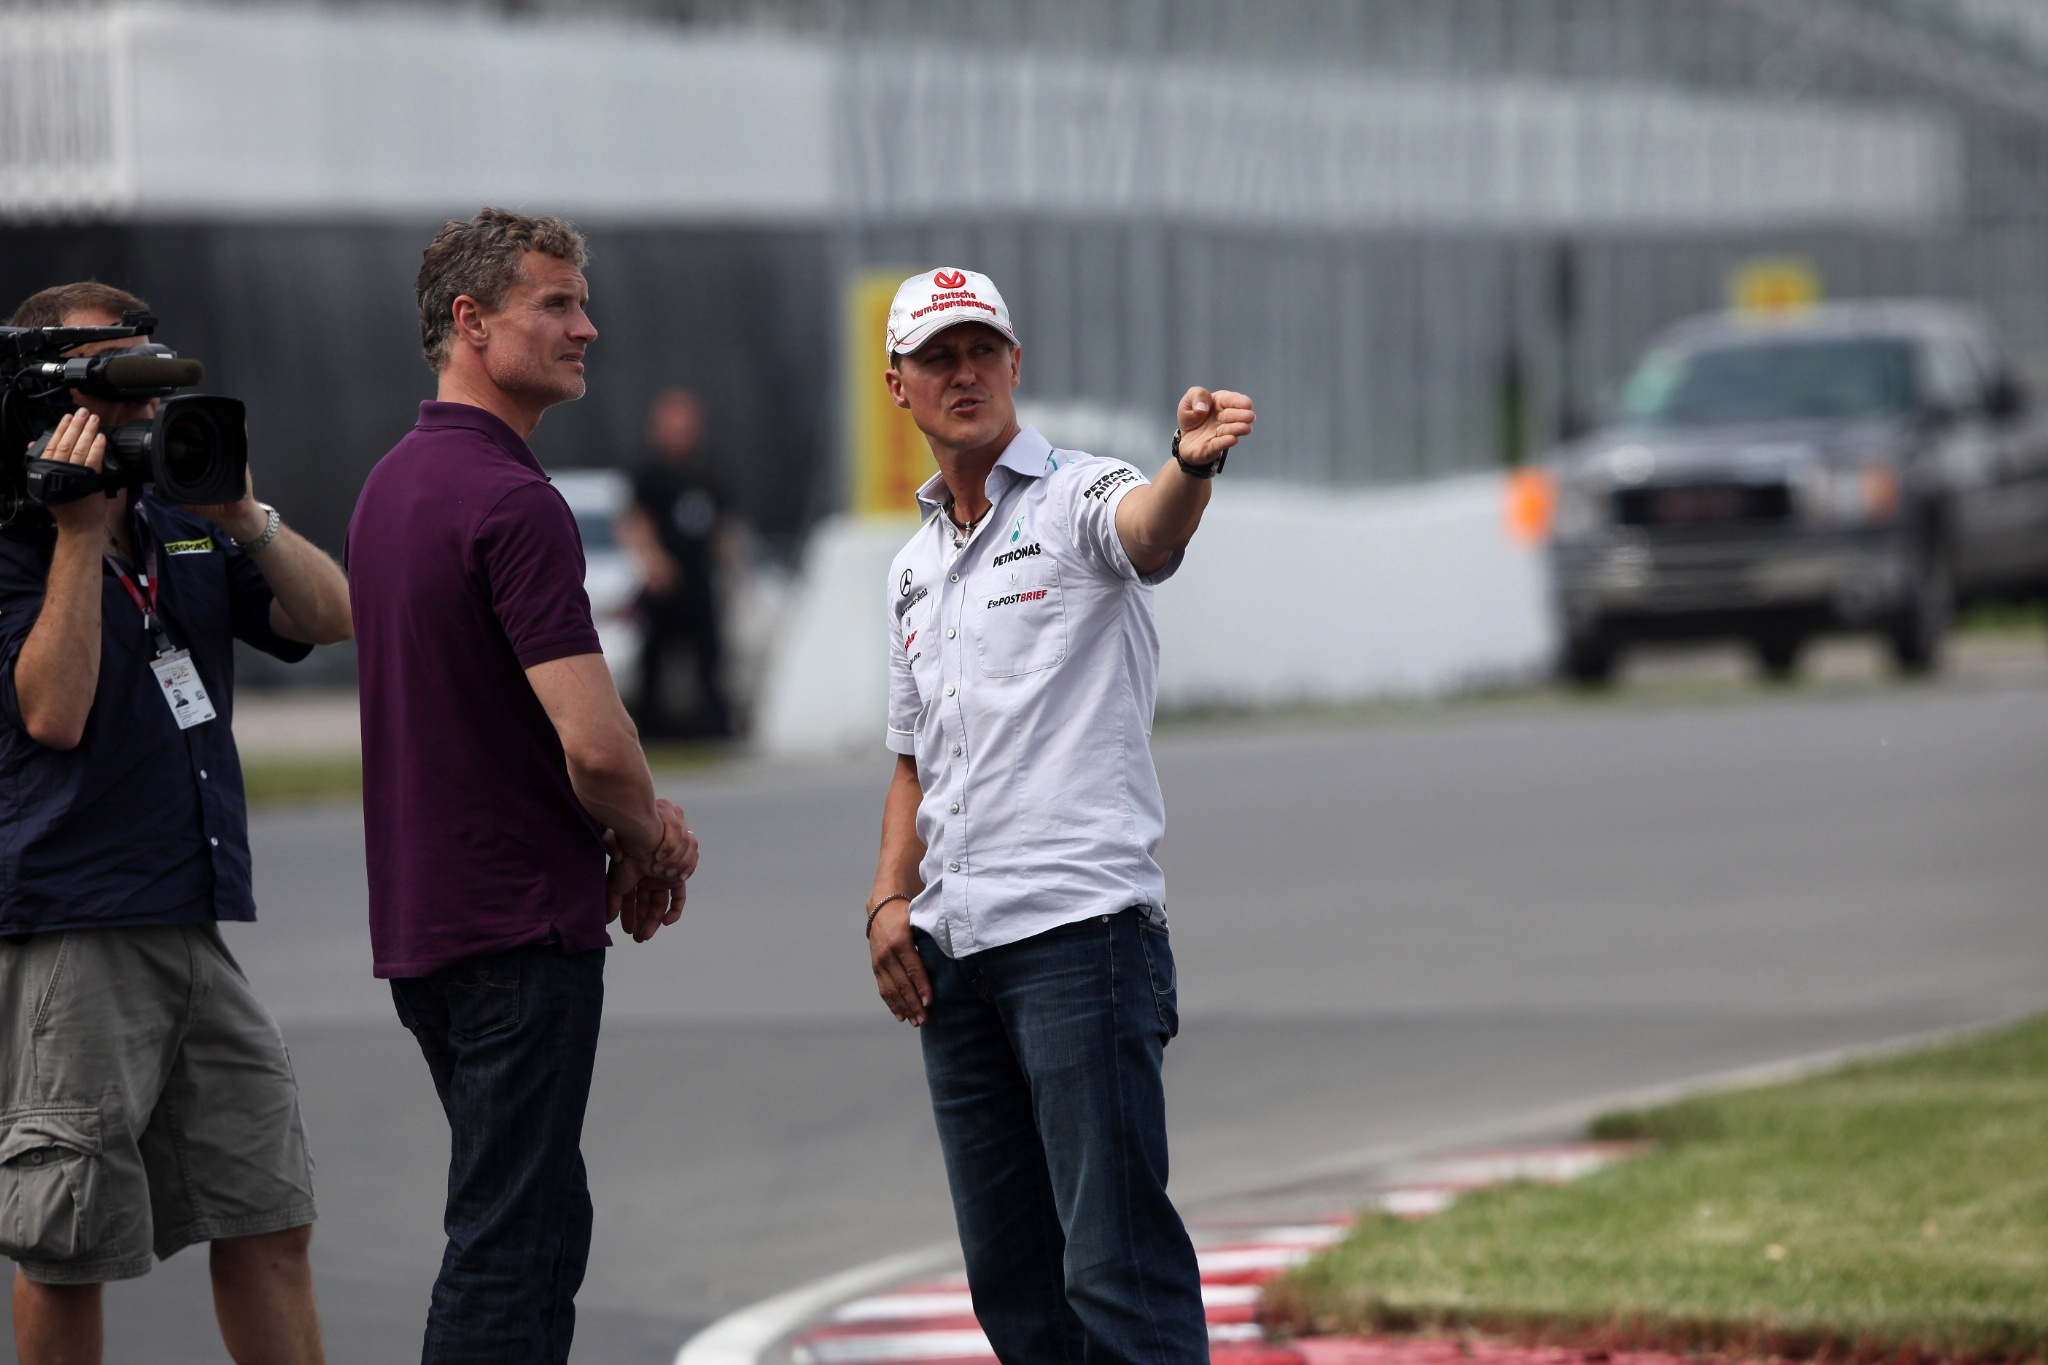 - David Coulthard (GBR) and Michael Schumacher (GER), Mercedes GP Petronas F1 Team, MGP